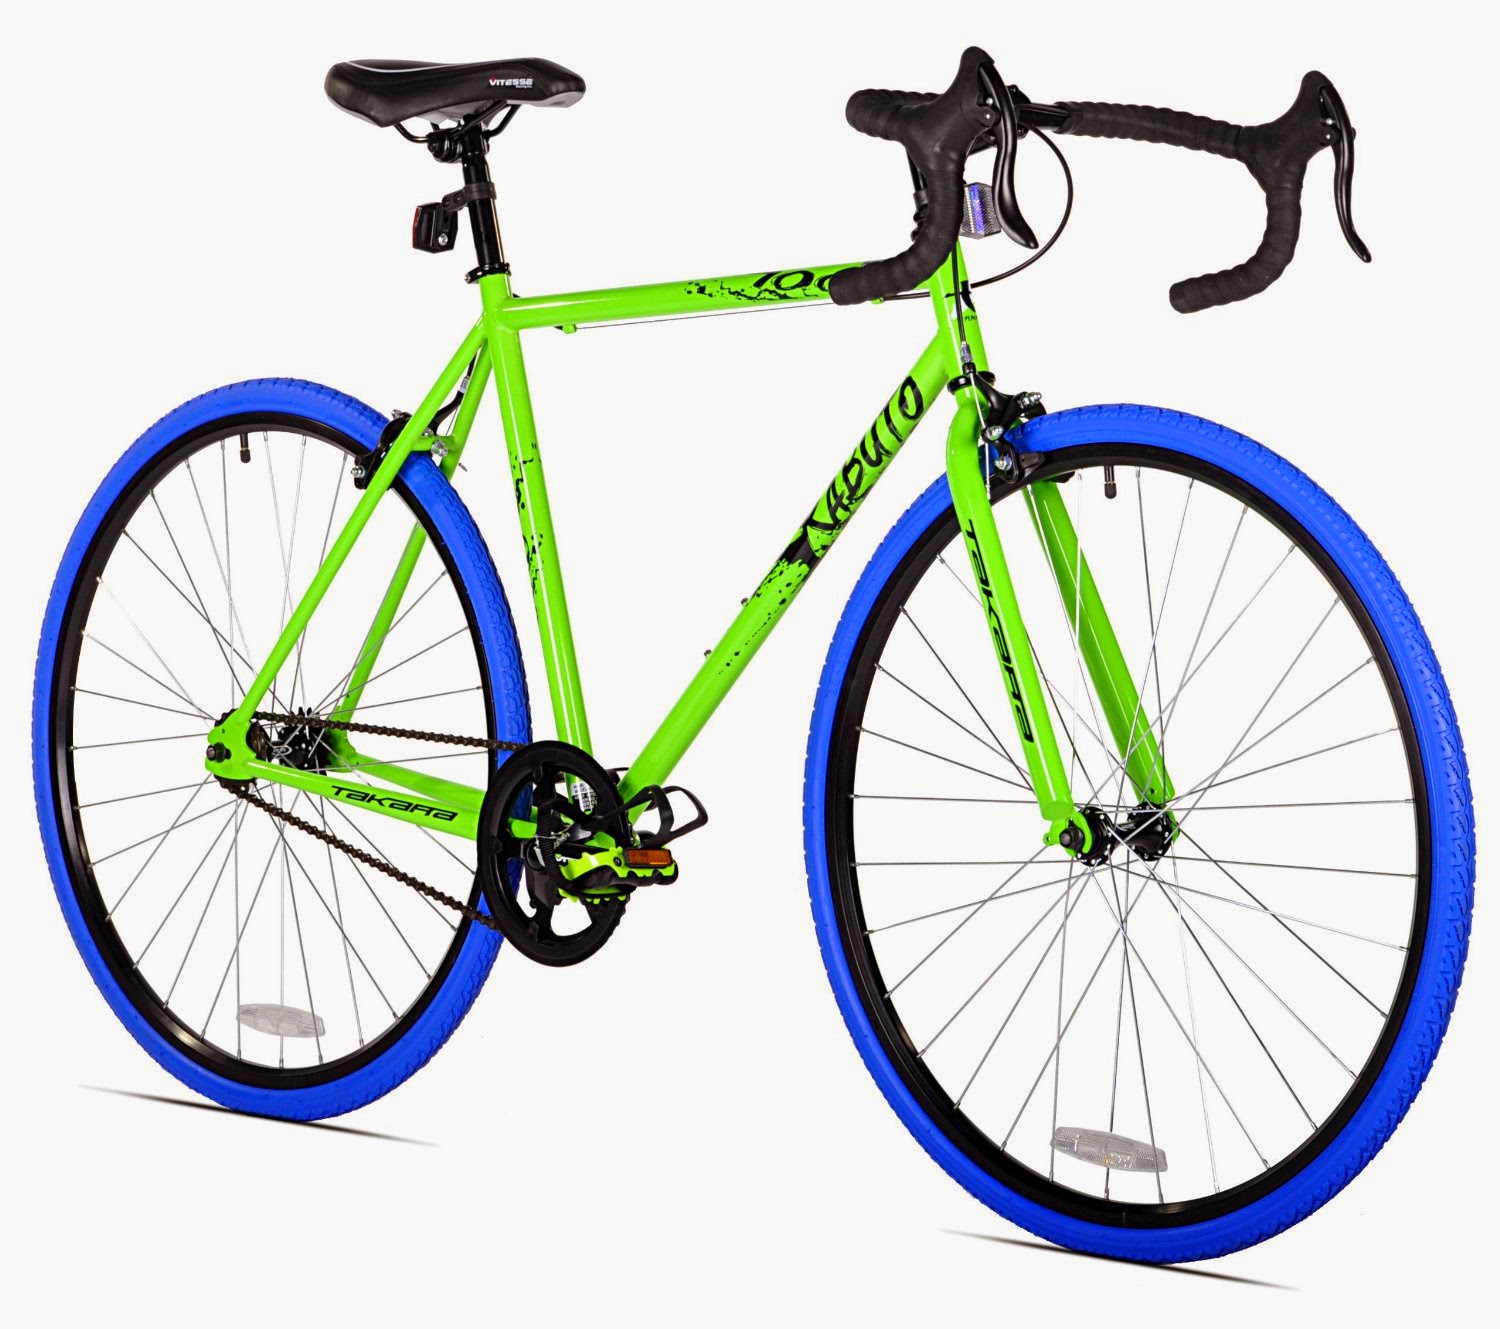 Takara Kabuto Single Speed Road Bike, green/blue, picture, review specs